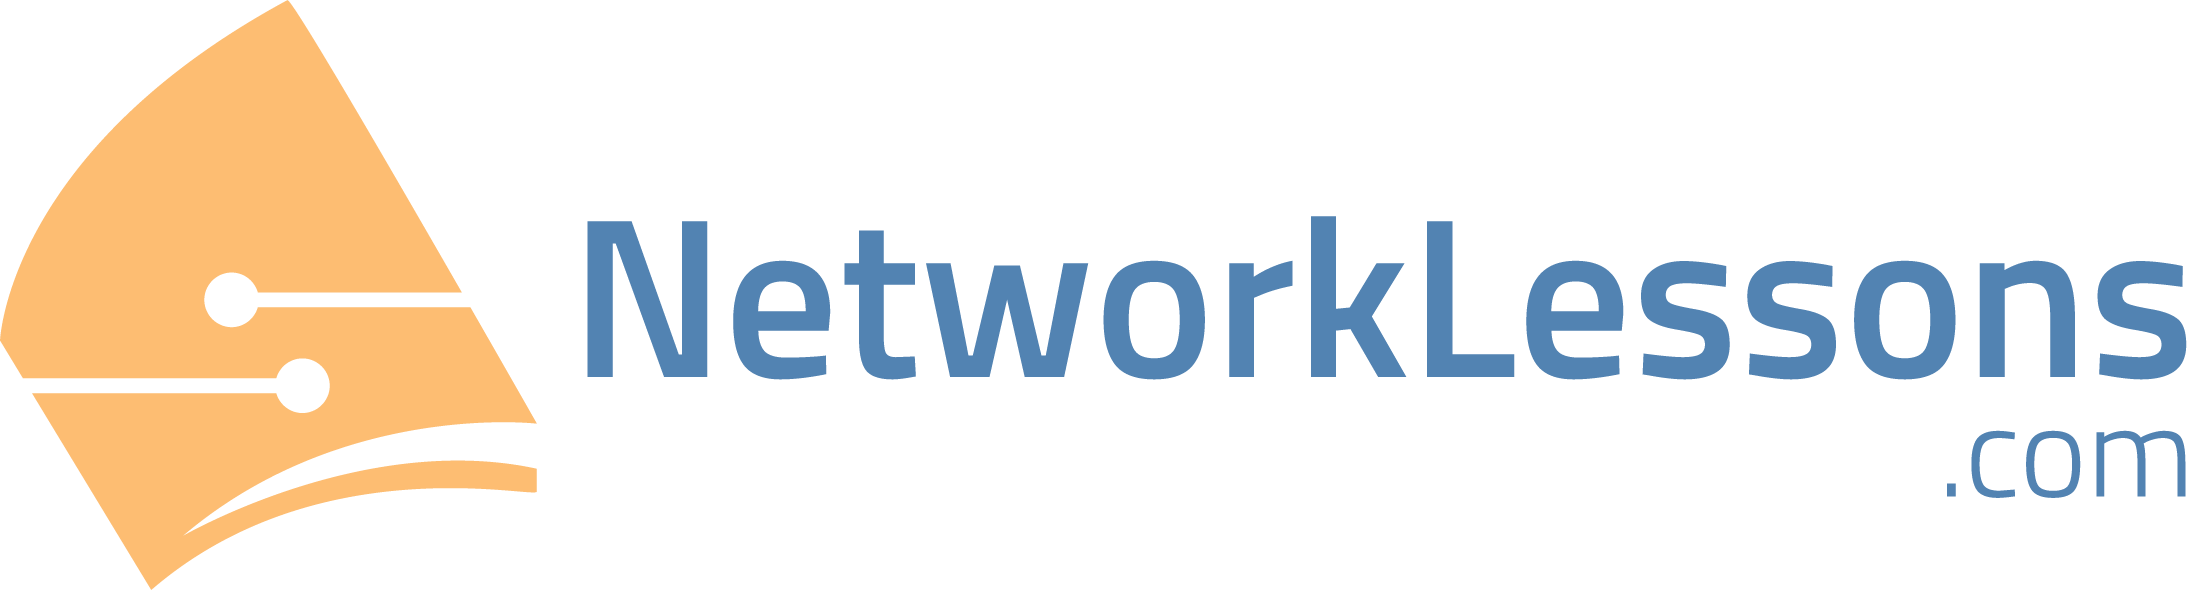 networklessons logo